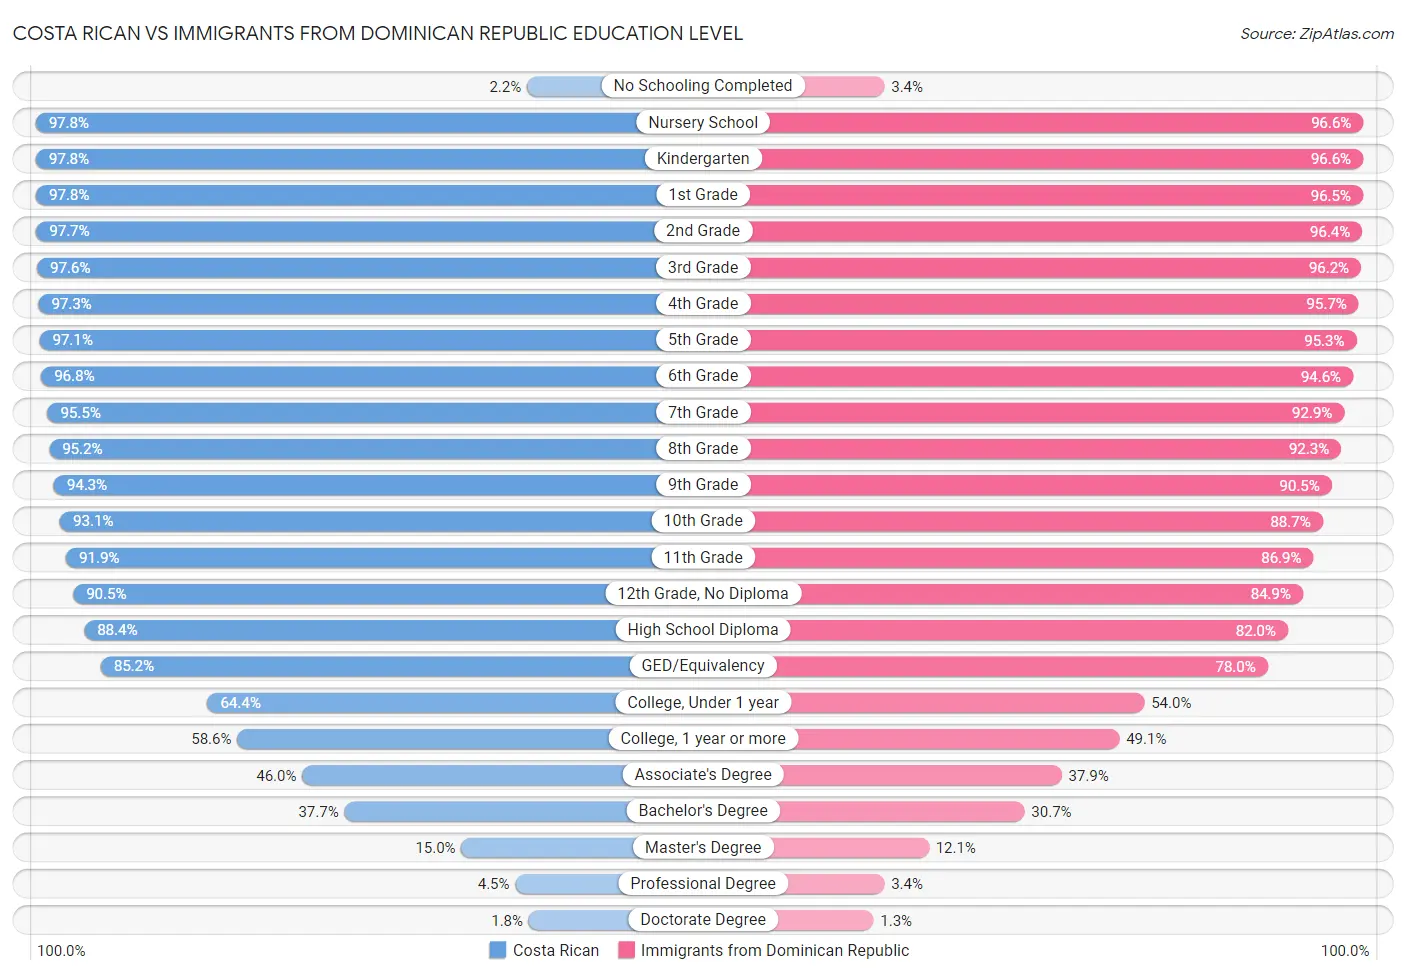 Costa Rican vs Immigrants from Dominican Republic Education Level